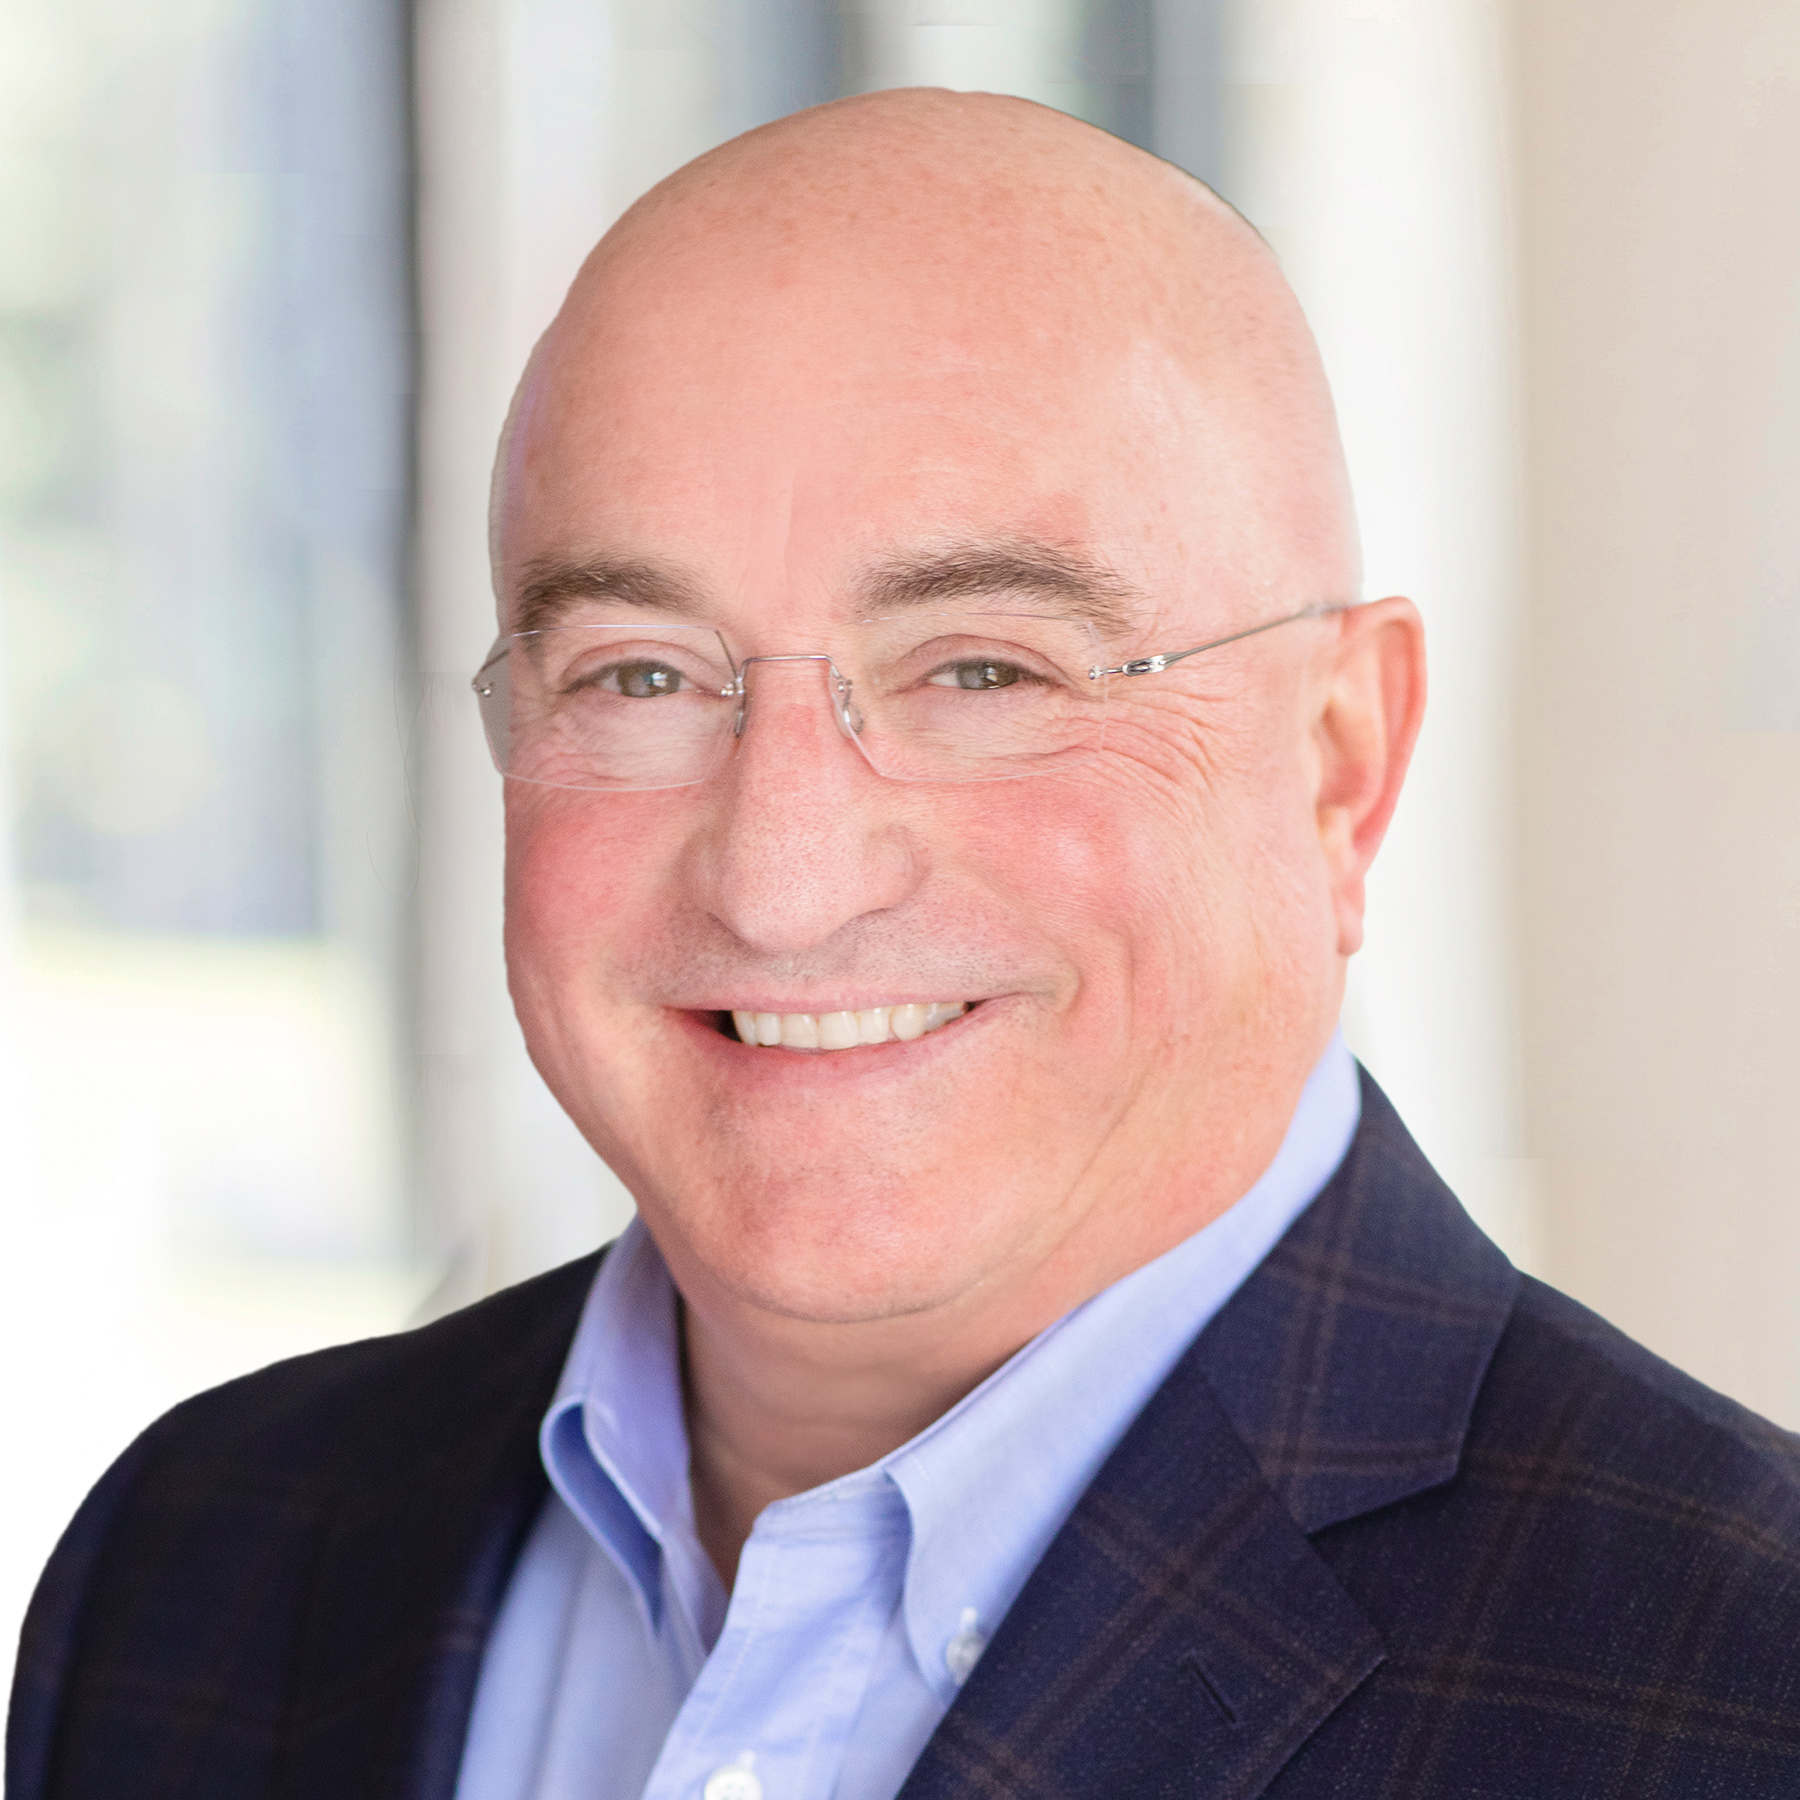 Bob Paulson, Sonex Health's President and CEO